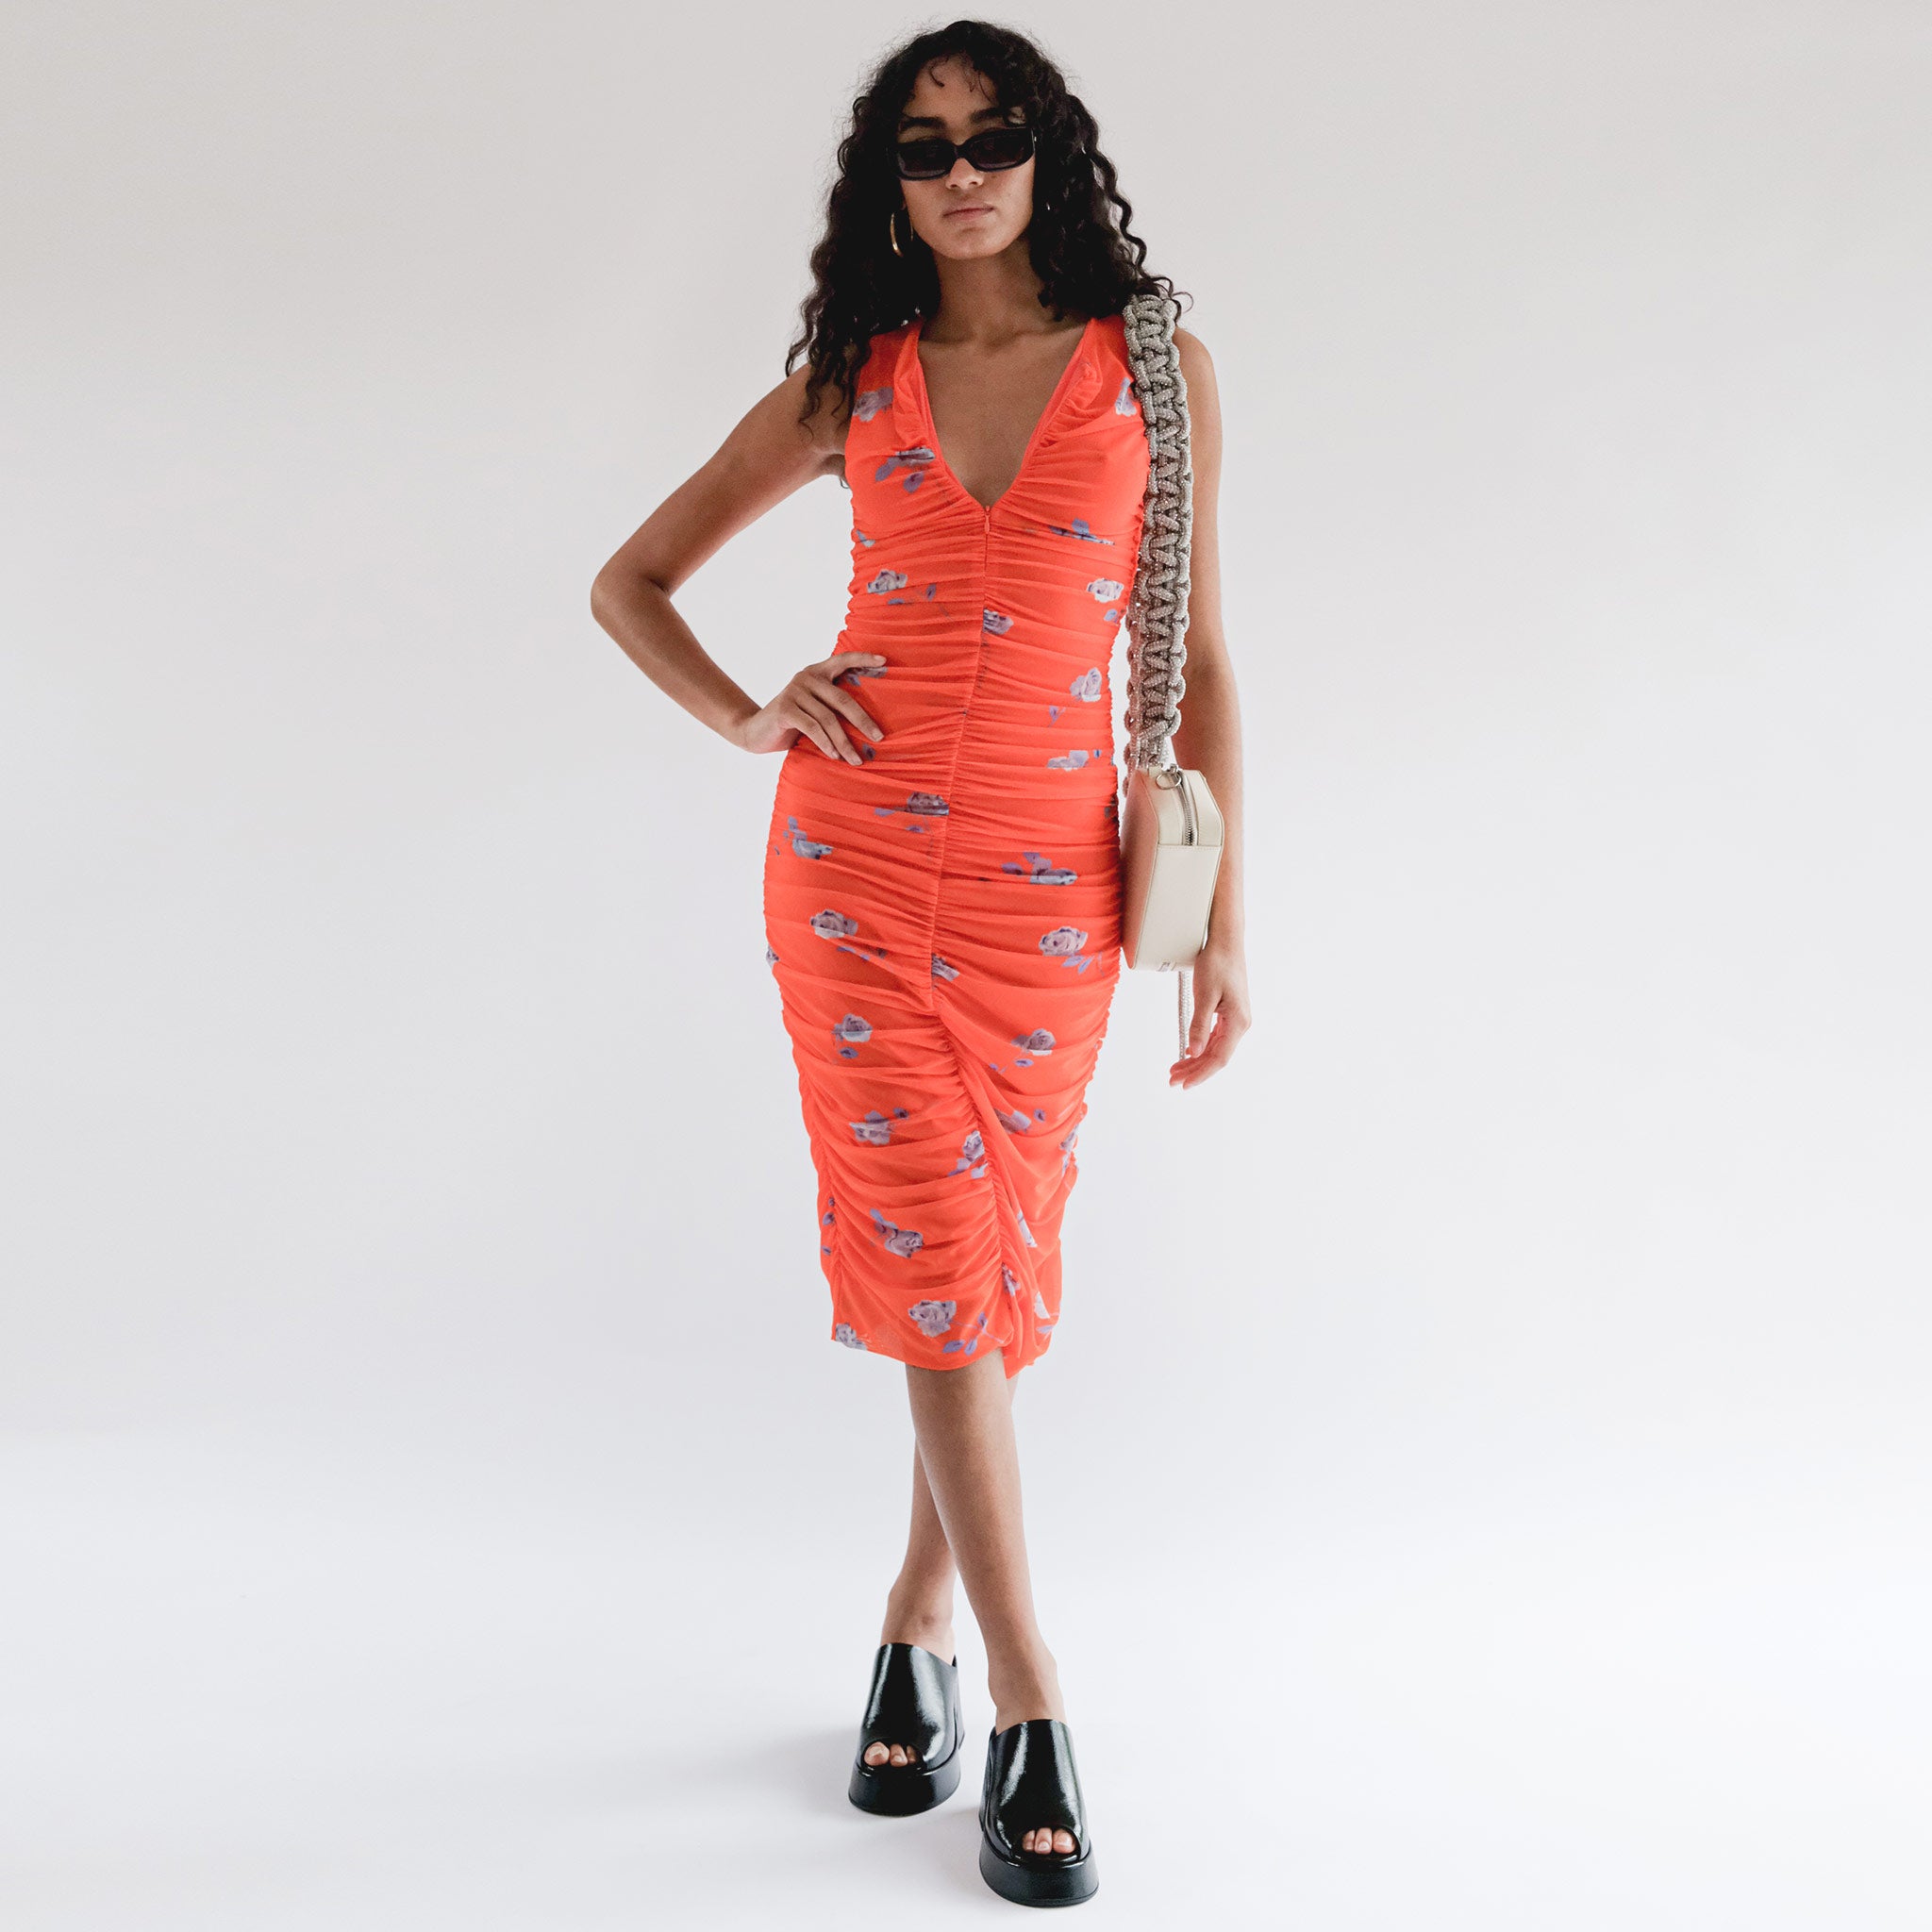 Full body photo of model wearing the Printed Mesh Ruched Sleeveless Midi Dress - Orangeade.